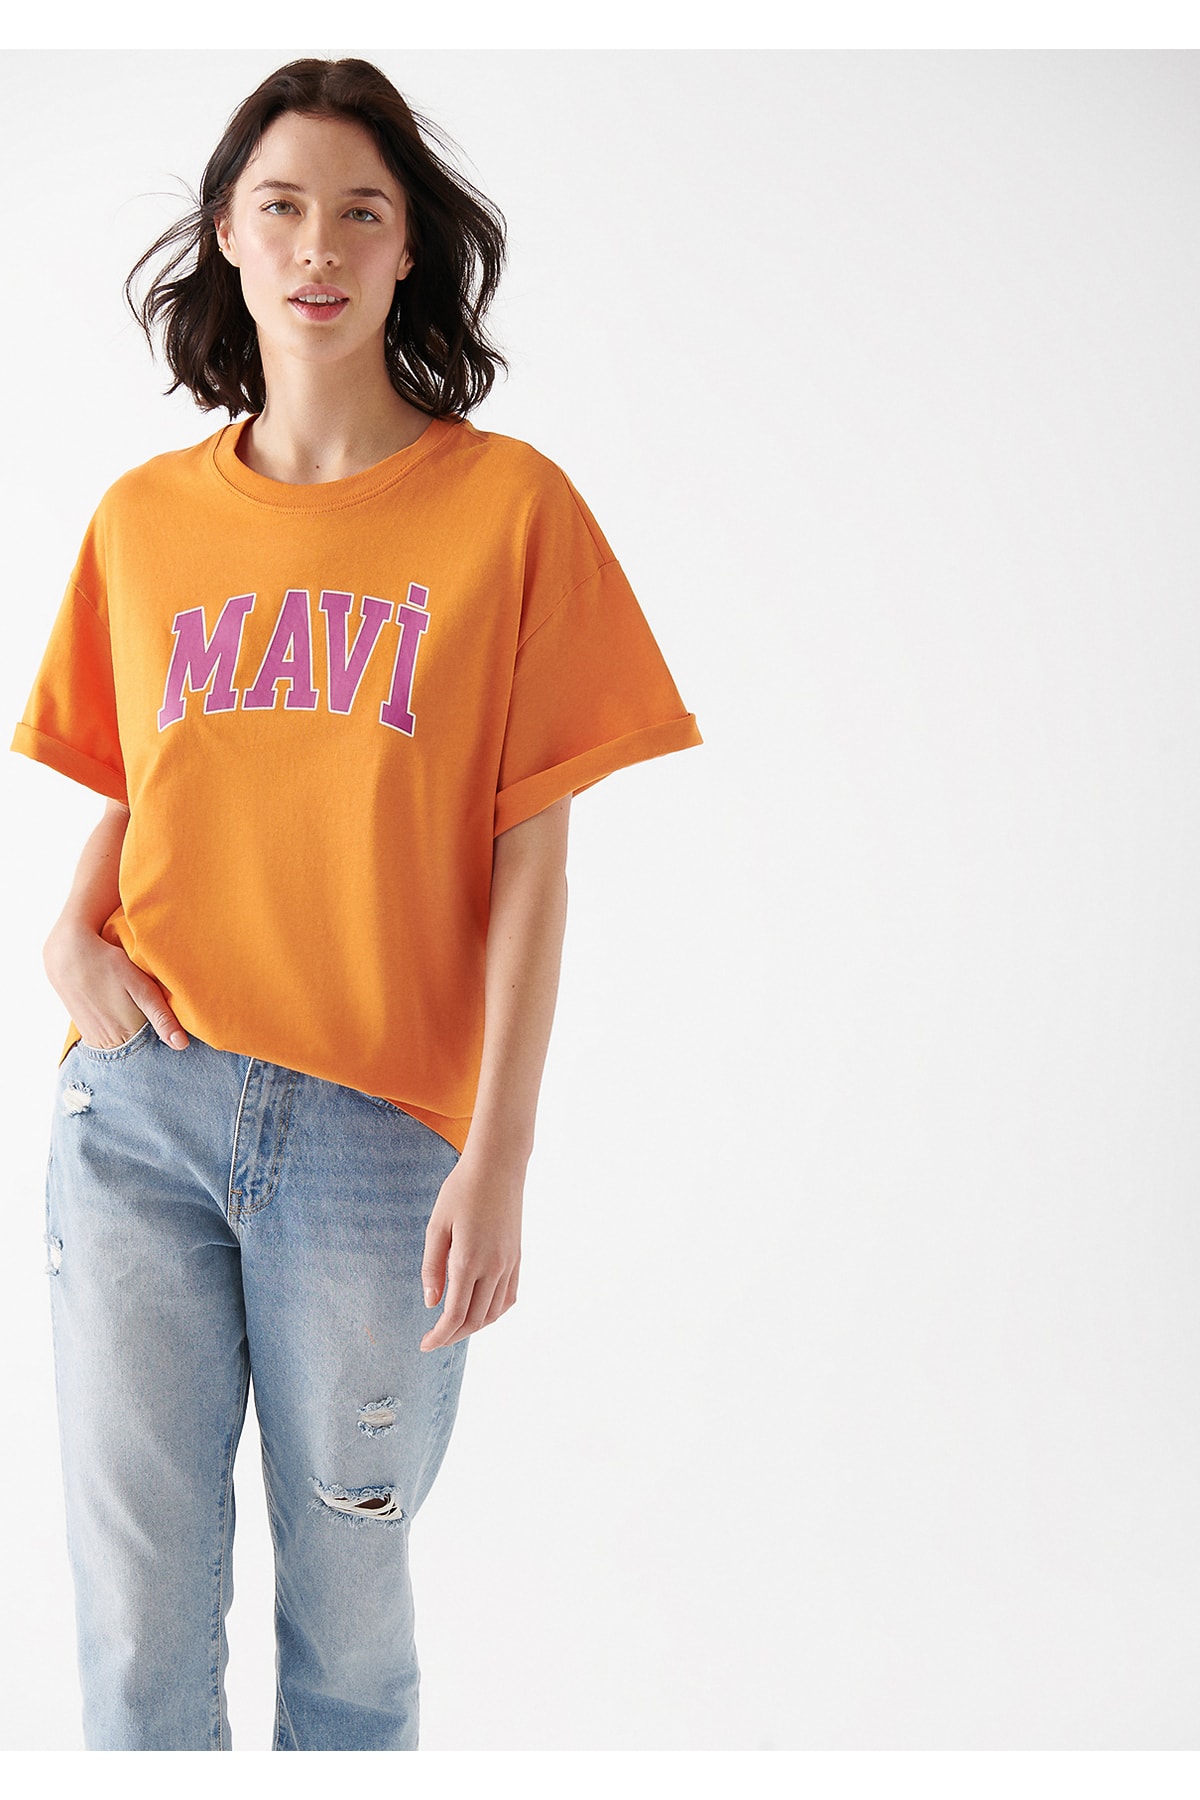 Mavi تی شرت چاپ شده با لوگو نارنجی سایز بزرگ / برش عریض 1600843-71424